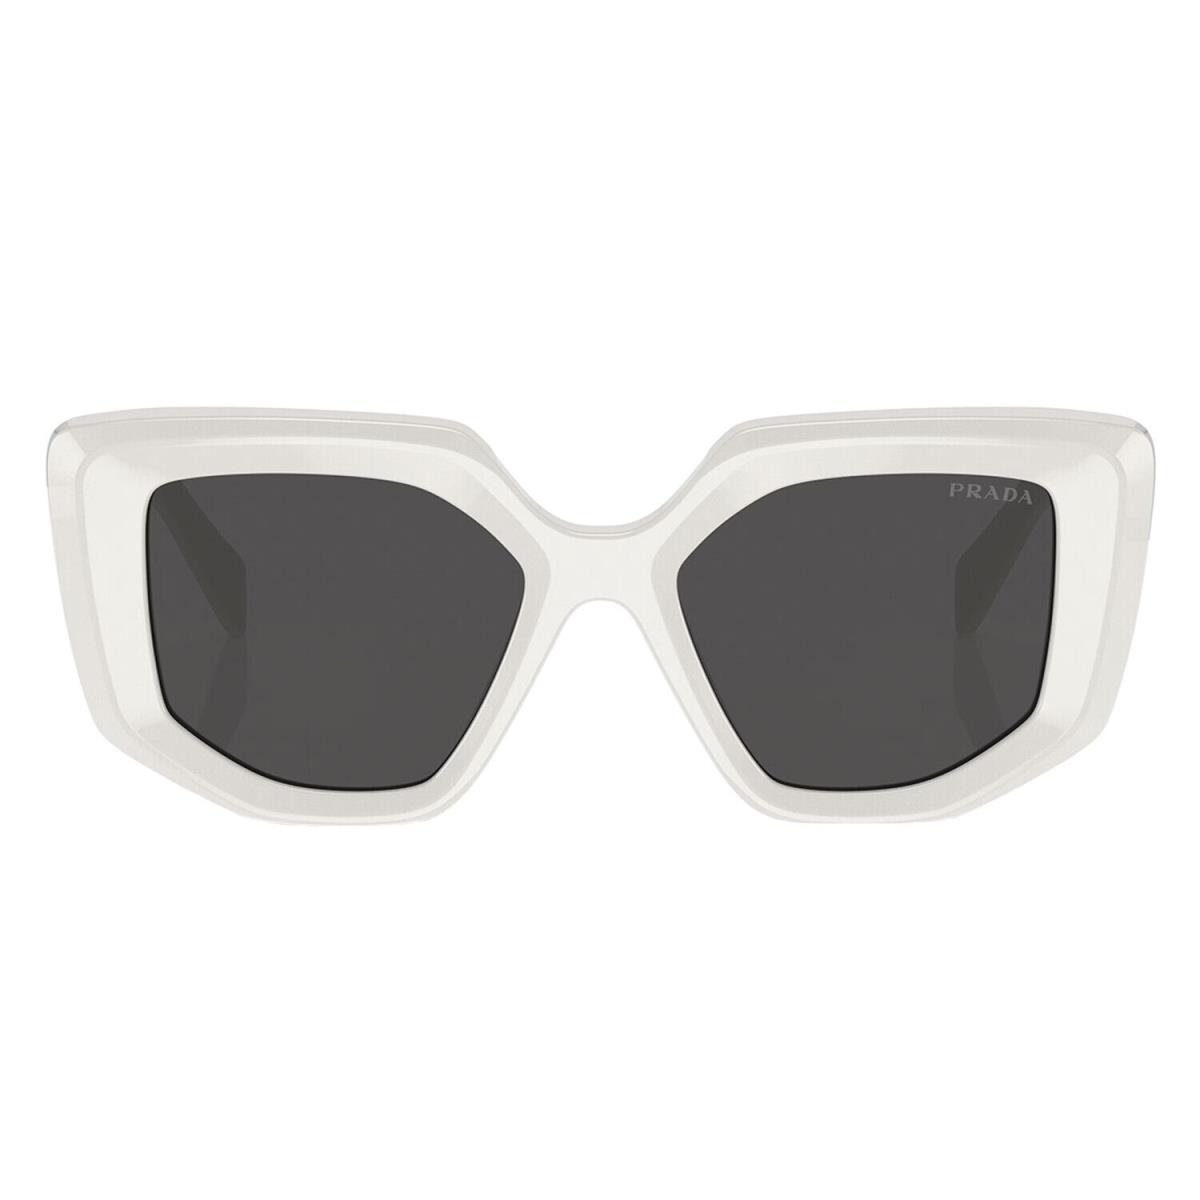 Prada PR 14ZS 1425S0 Talc Plastic Fashion Sunglasses Grey Lens